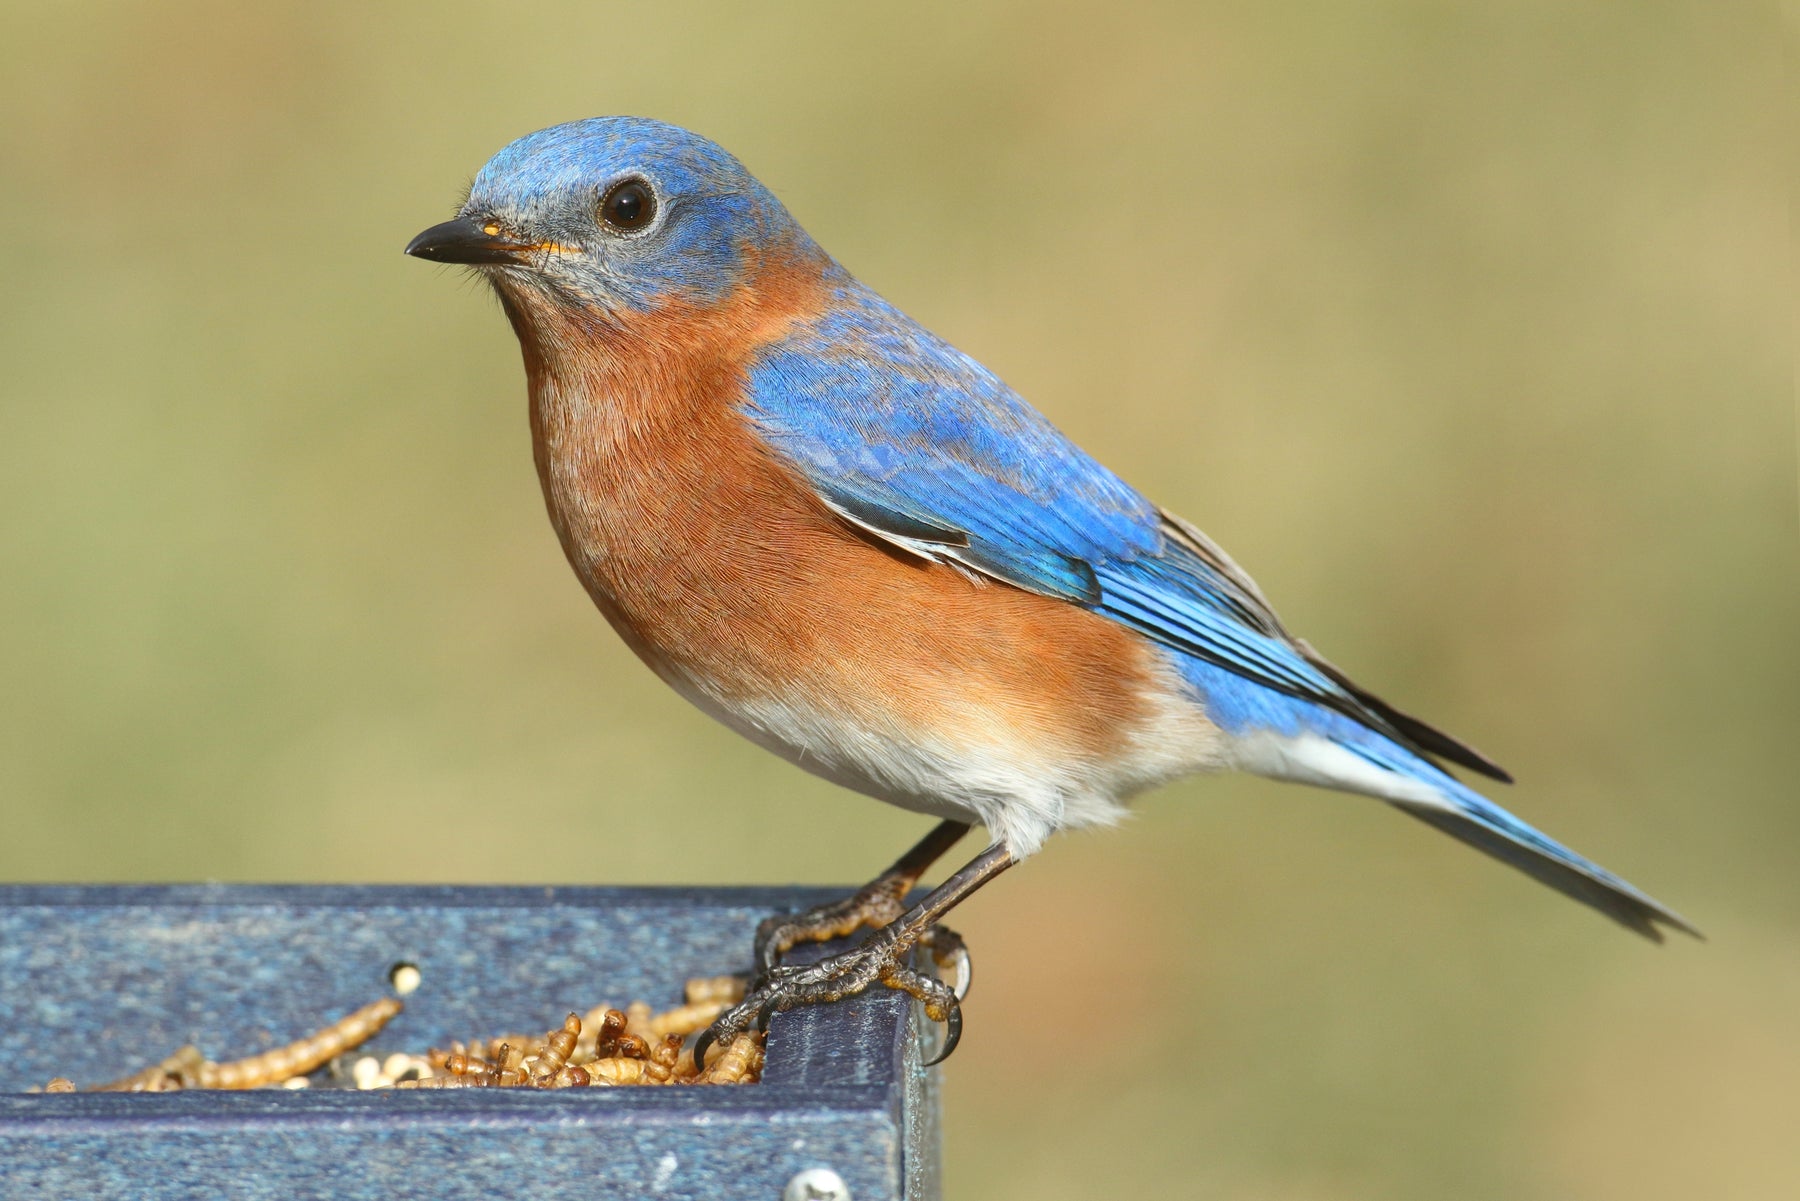 DIY Mealworm Feeder To Attract Bluebirds, Other Birds